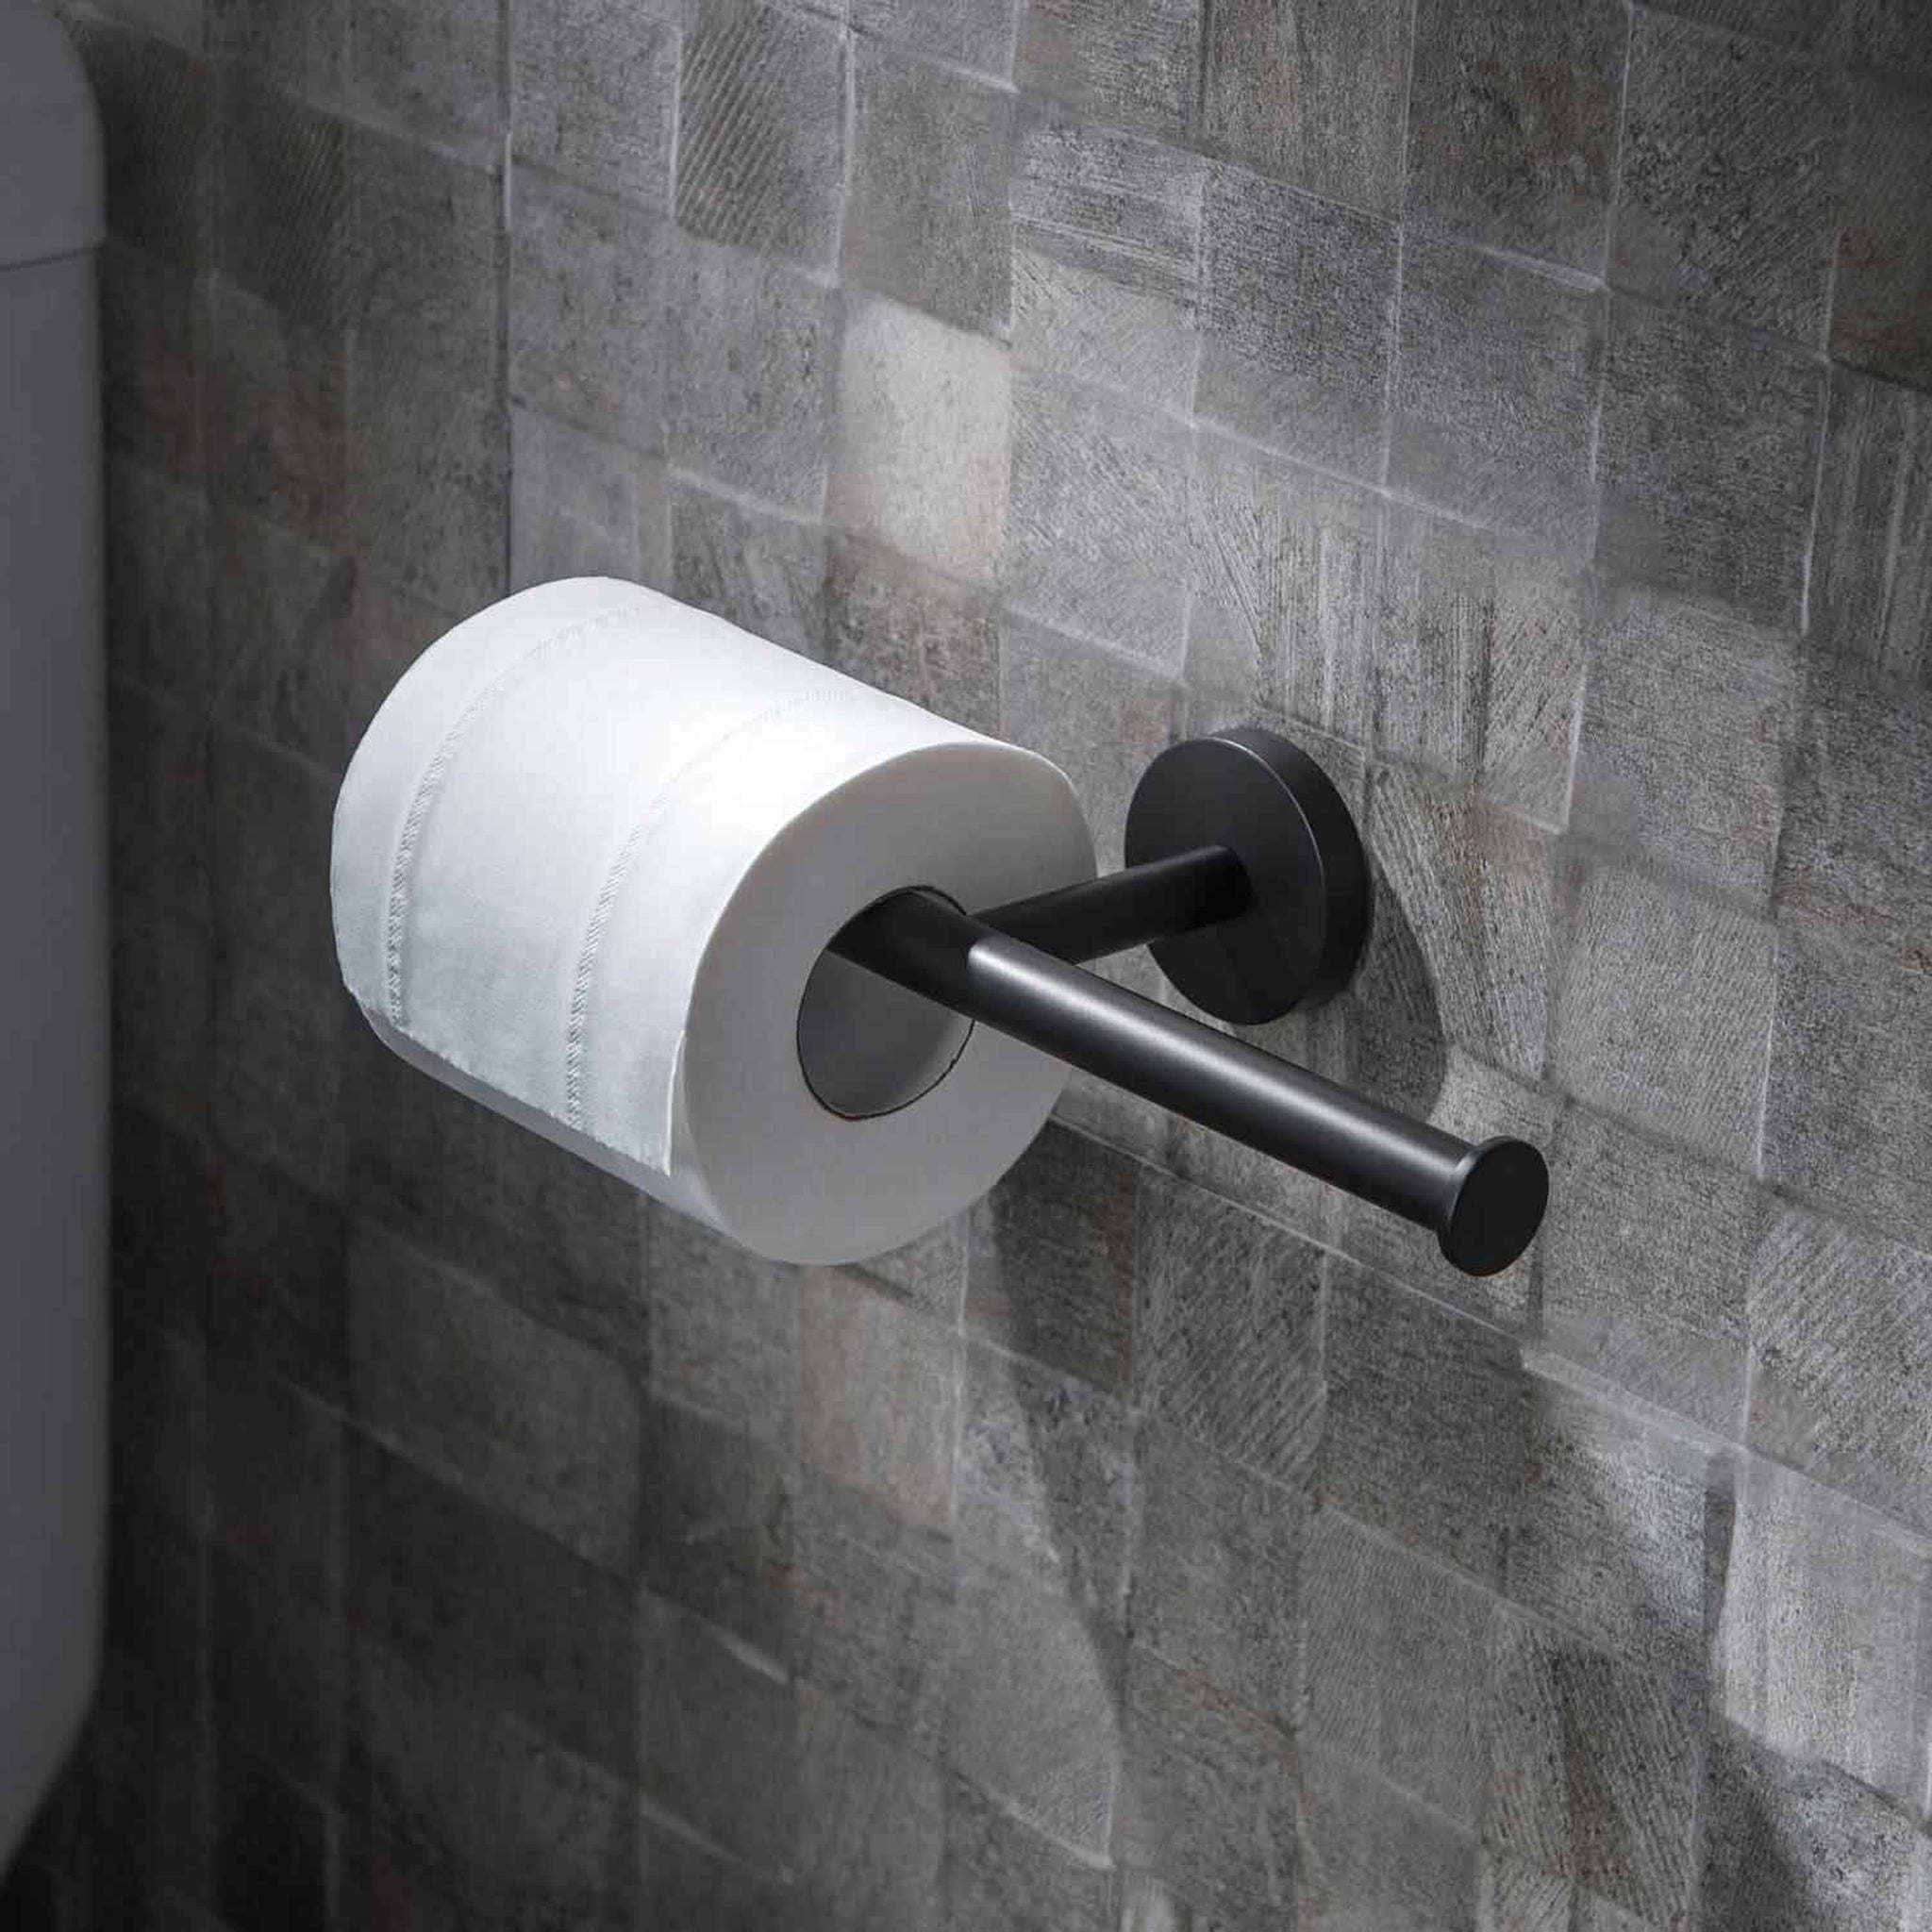 KIBI, KIBI Circular Brass Bathroom Double Toilet Paper Holder in Matte Black Finish